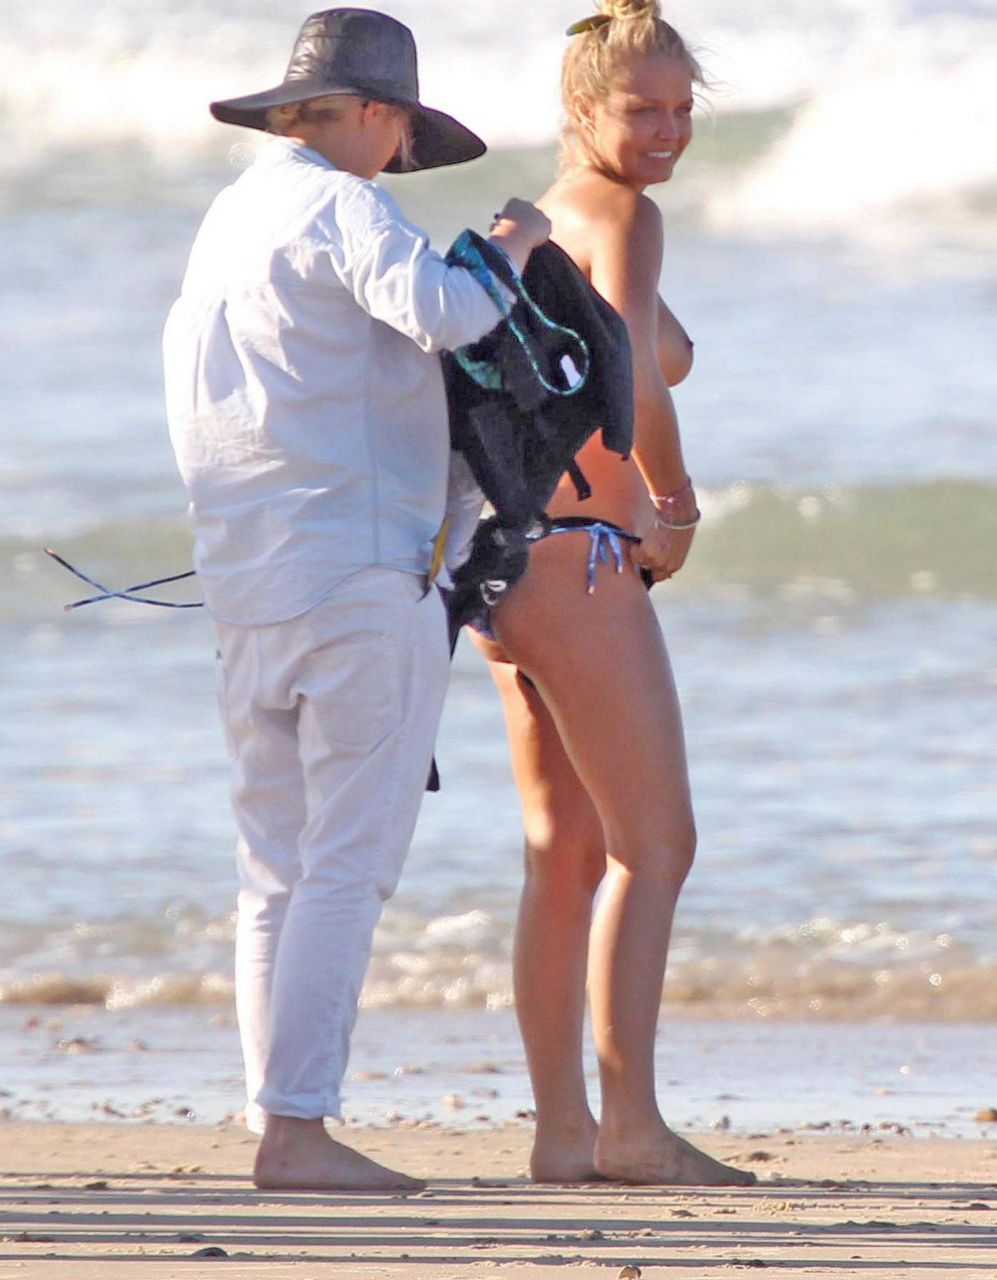 Lara Bingle - nagie piersi seksownej modelki w sesji w bikini